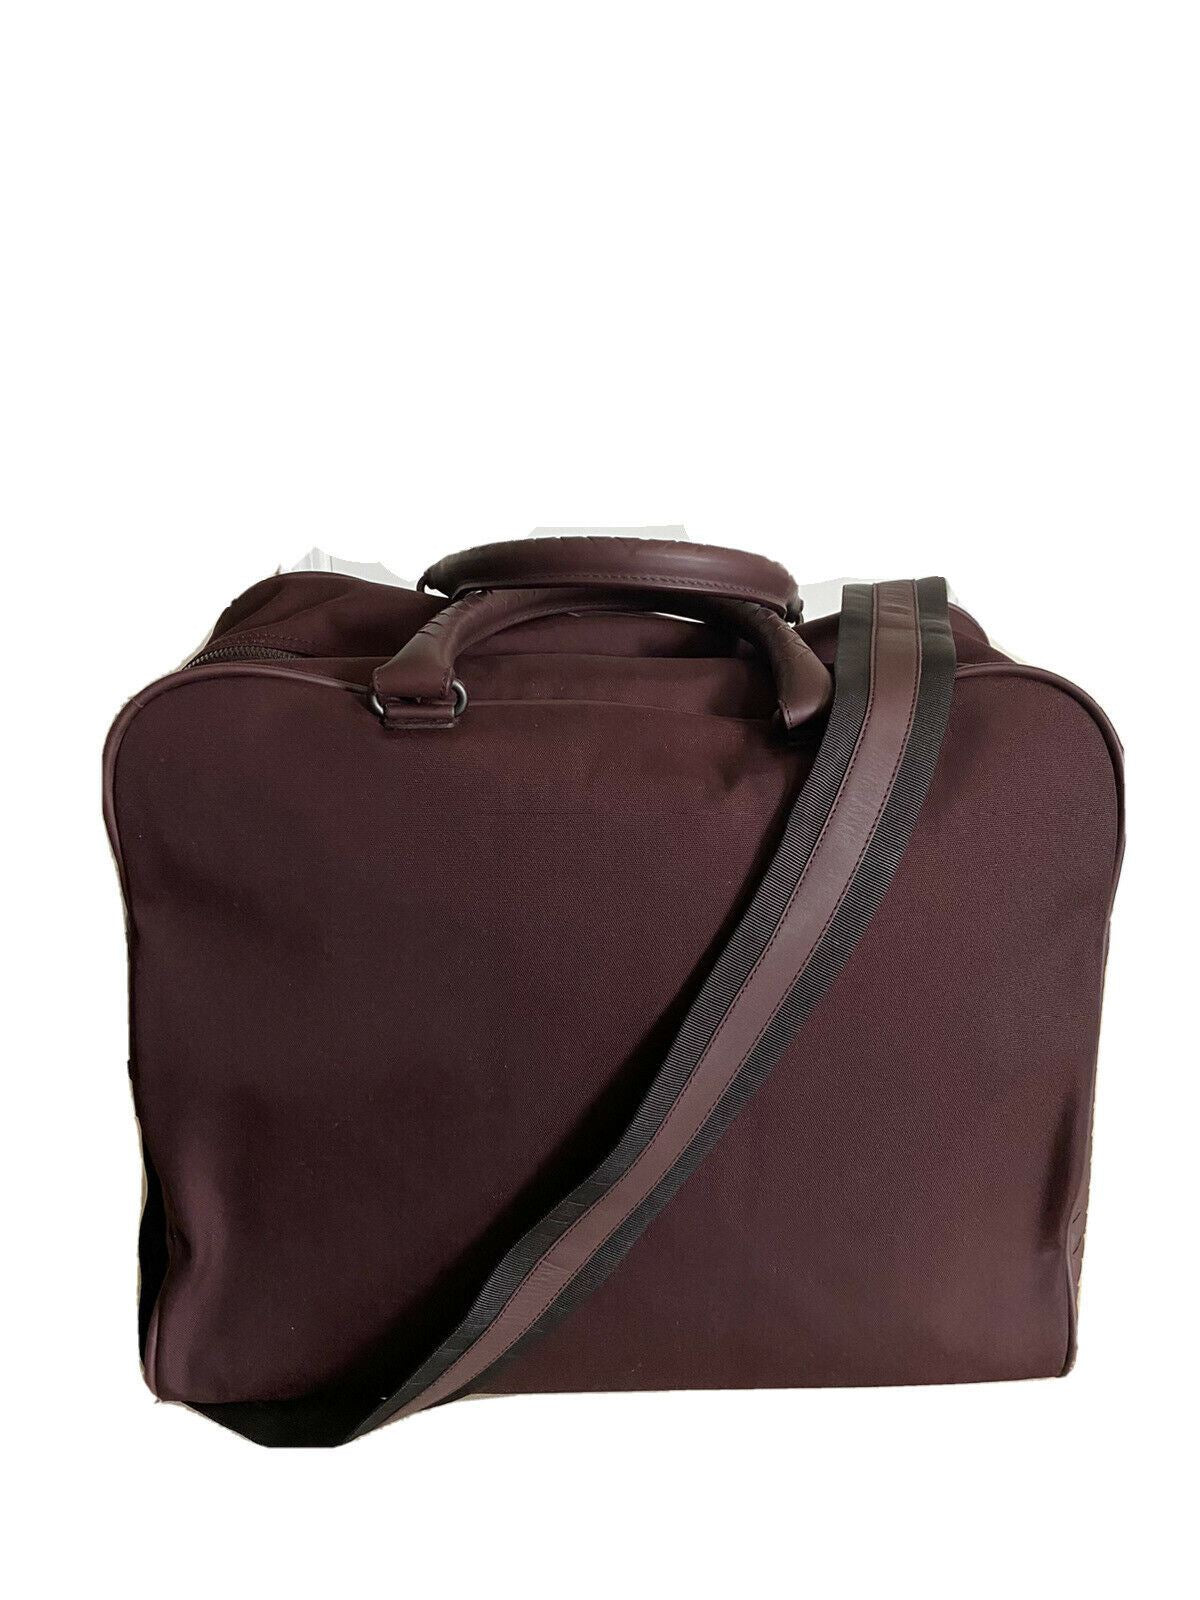 New $2750 Bottega Veneta Men Leather/Canvas Travel Bag Burgundy Italy